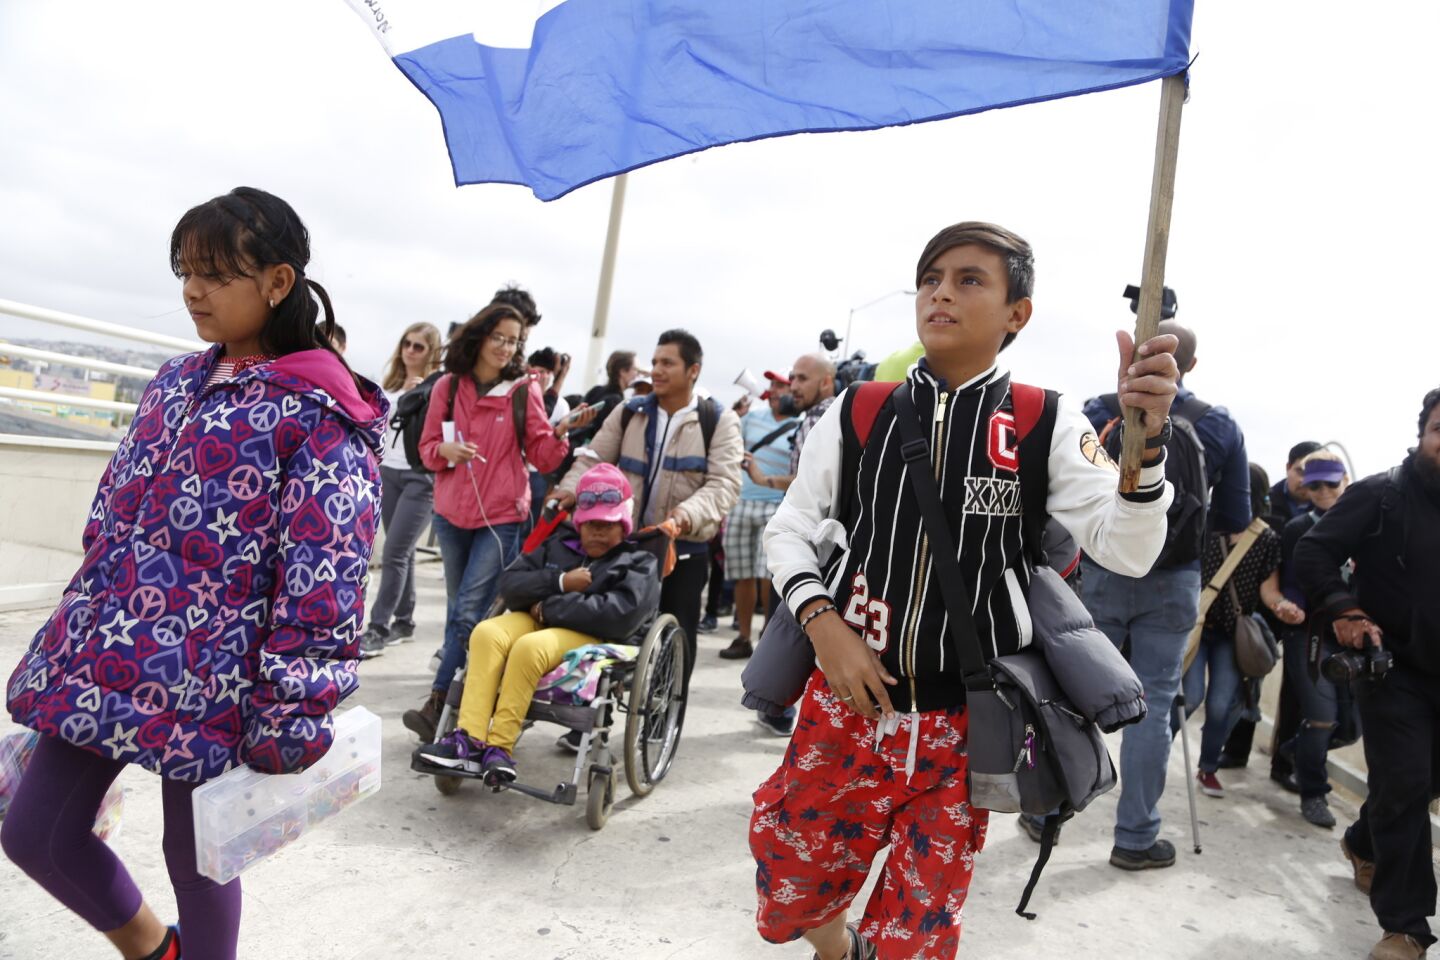 The caravan of Central America seek asylum at Chaparral